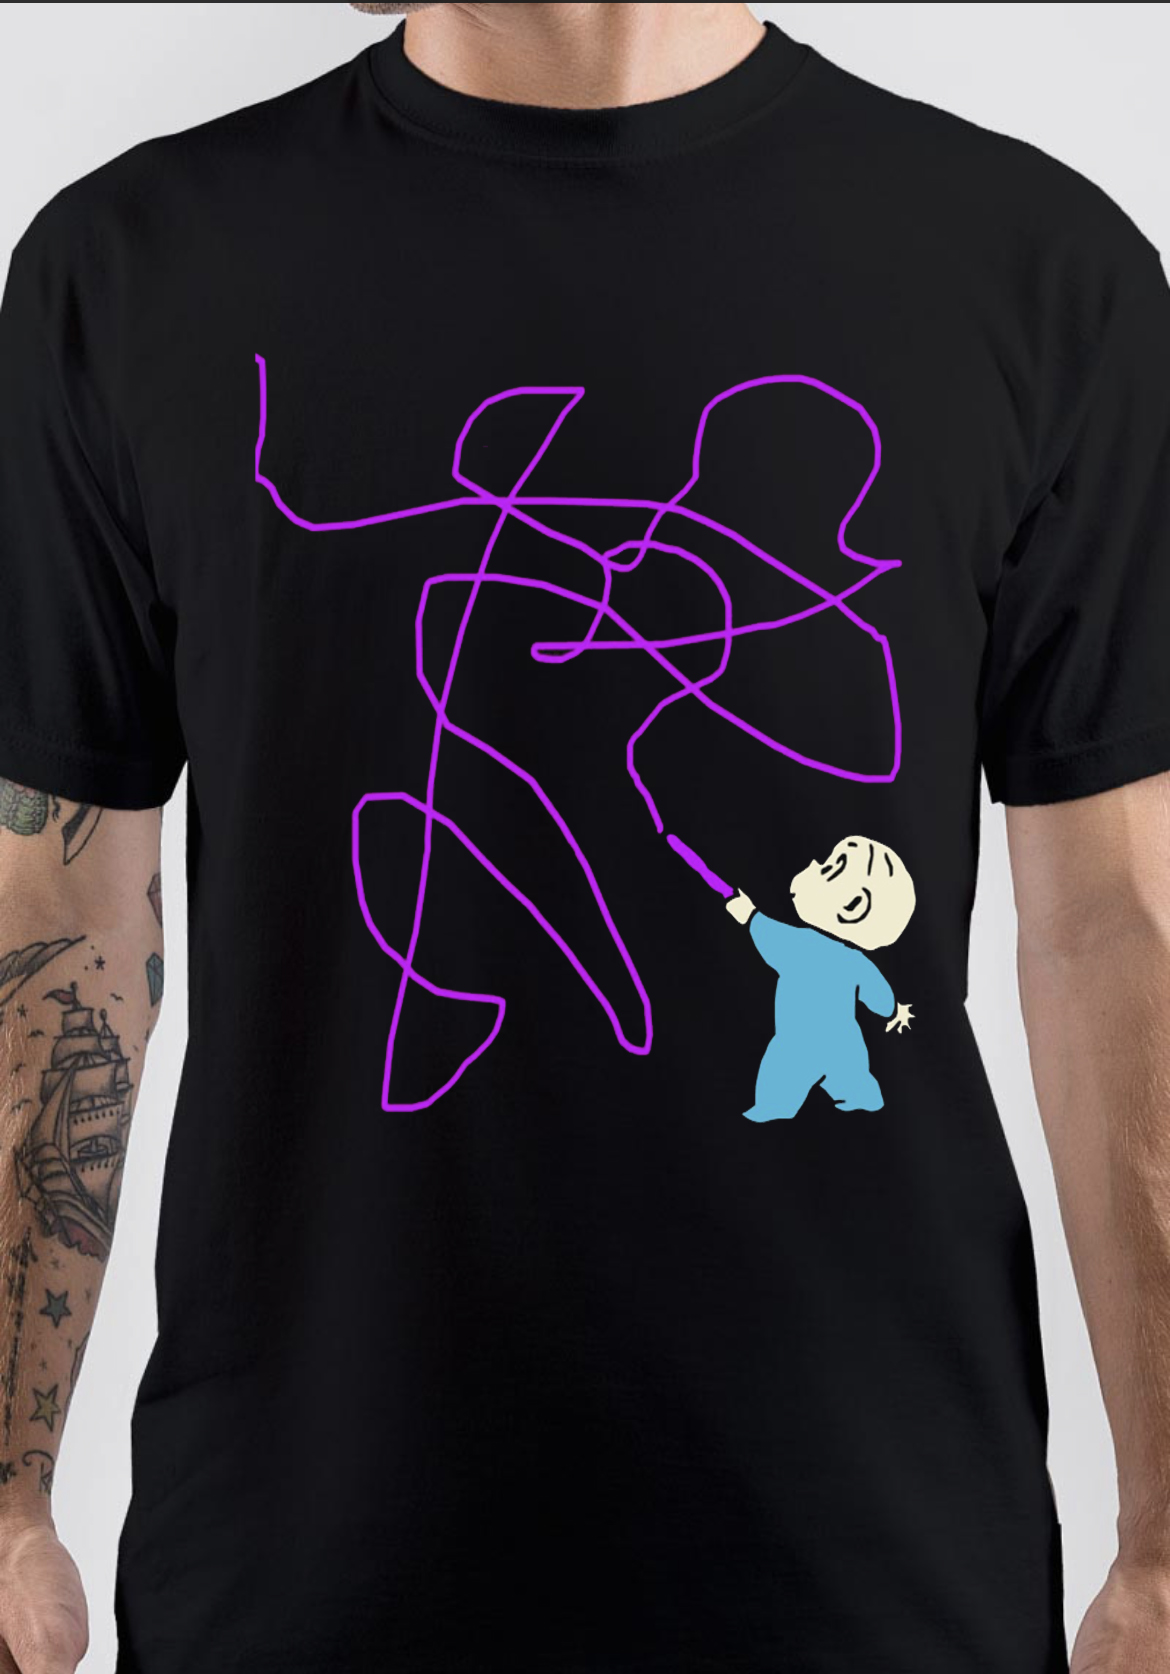 Harold T-Shirt And Merchandise